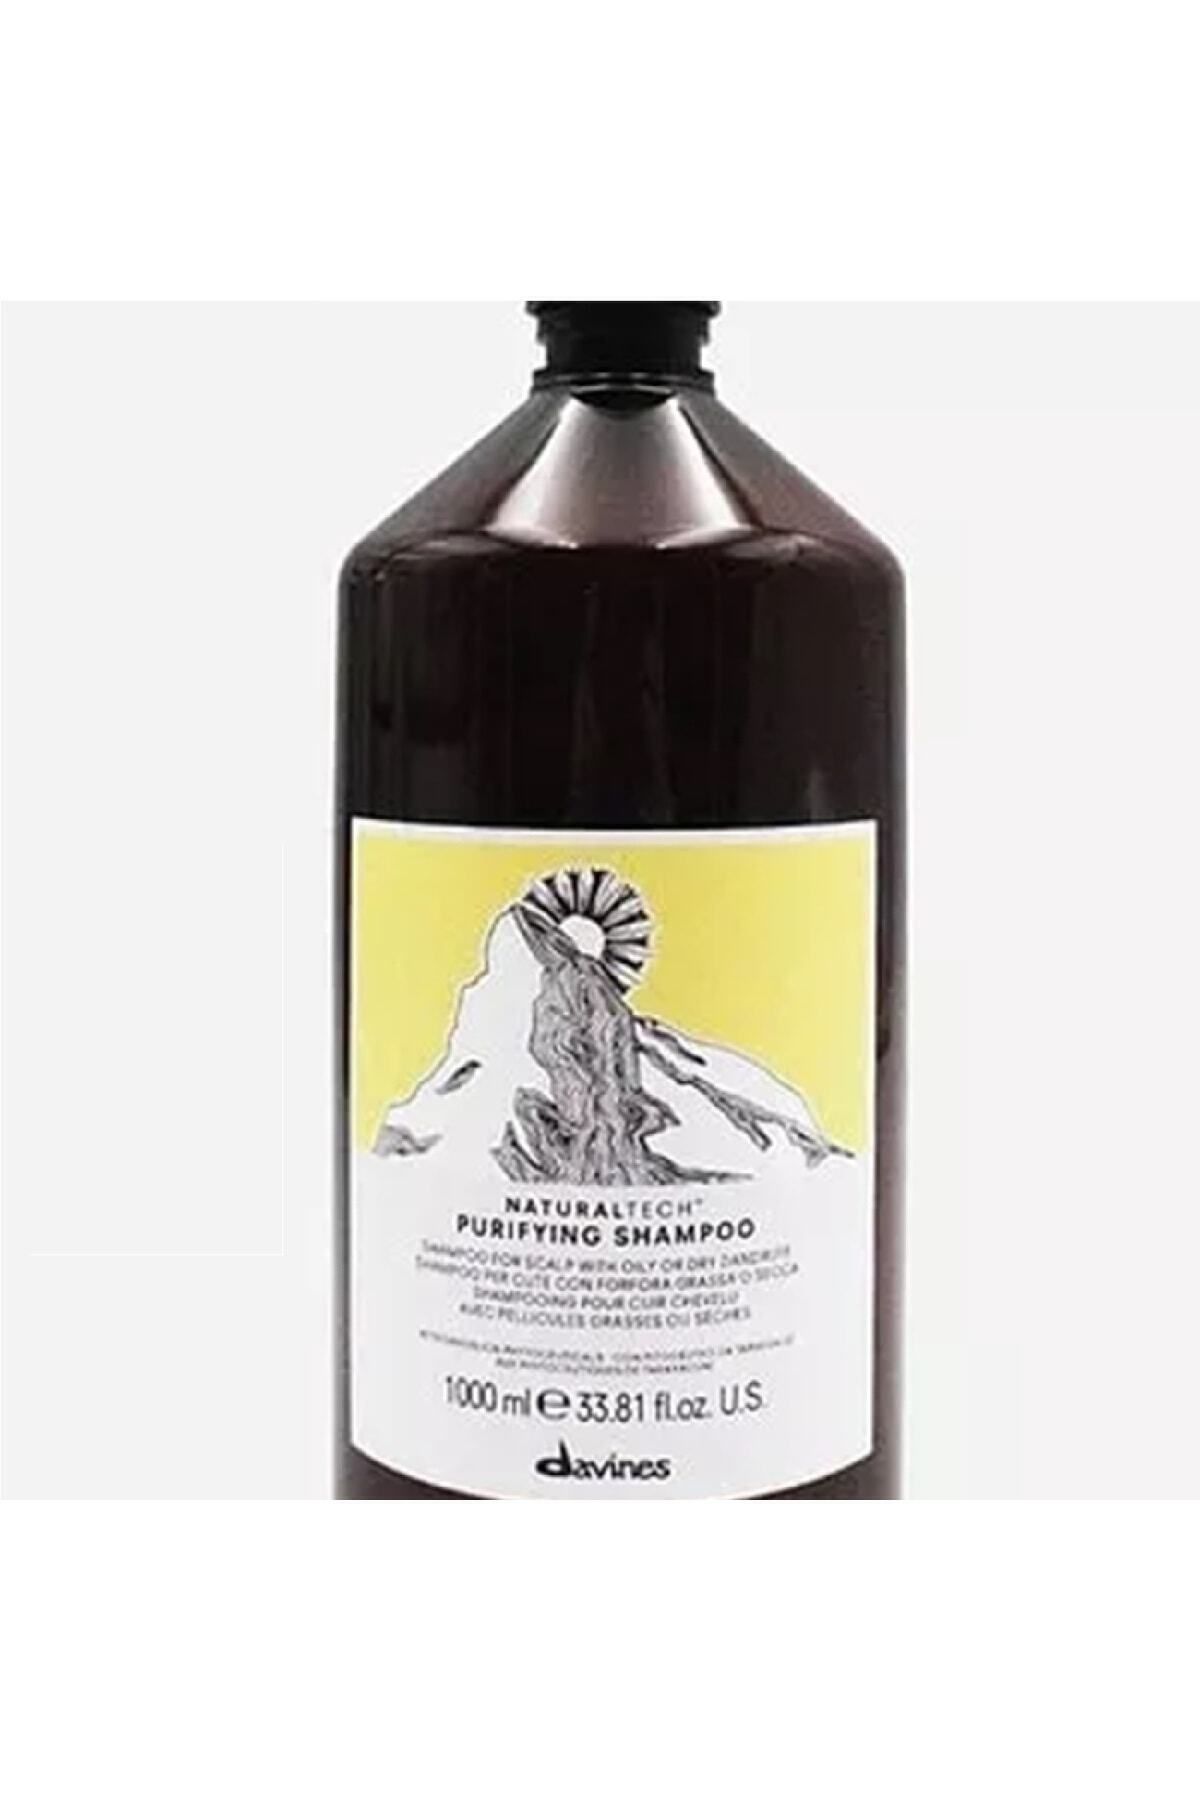 Davines naturre** ı.Purifying for oily hair Dandruff Shampoo eVA kUAFORR*29